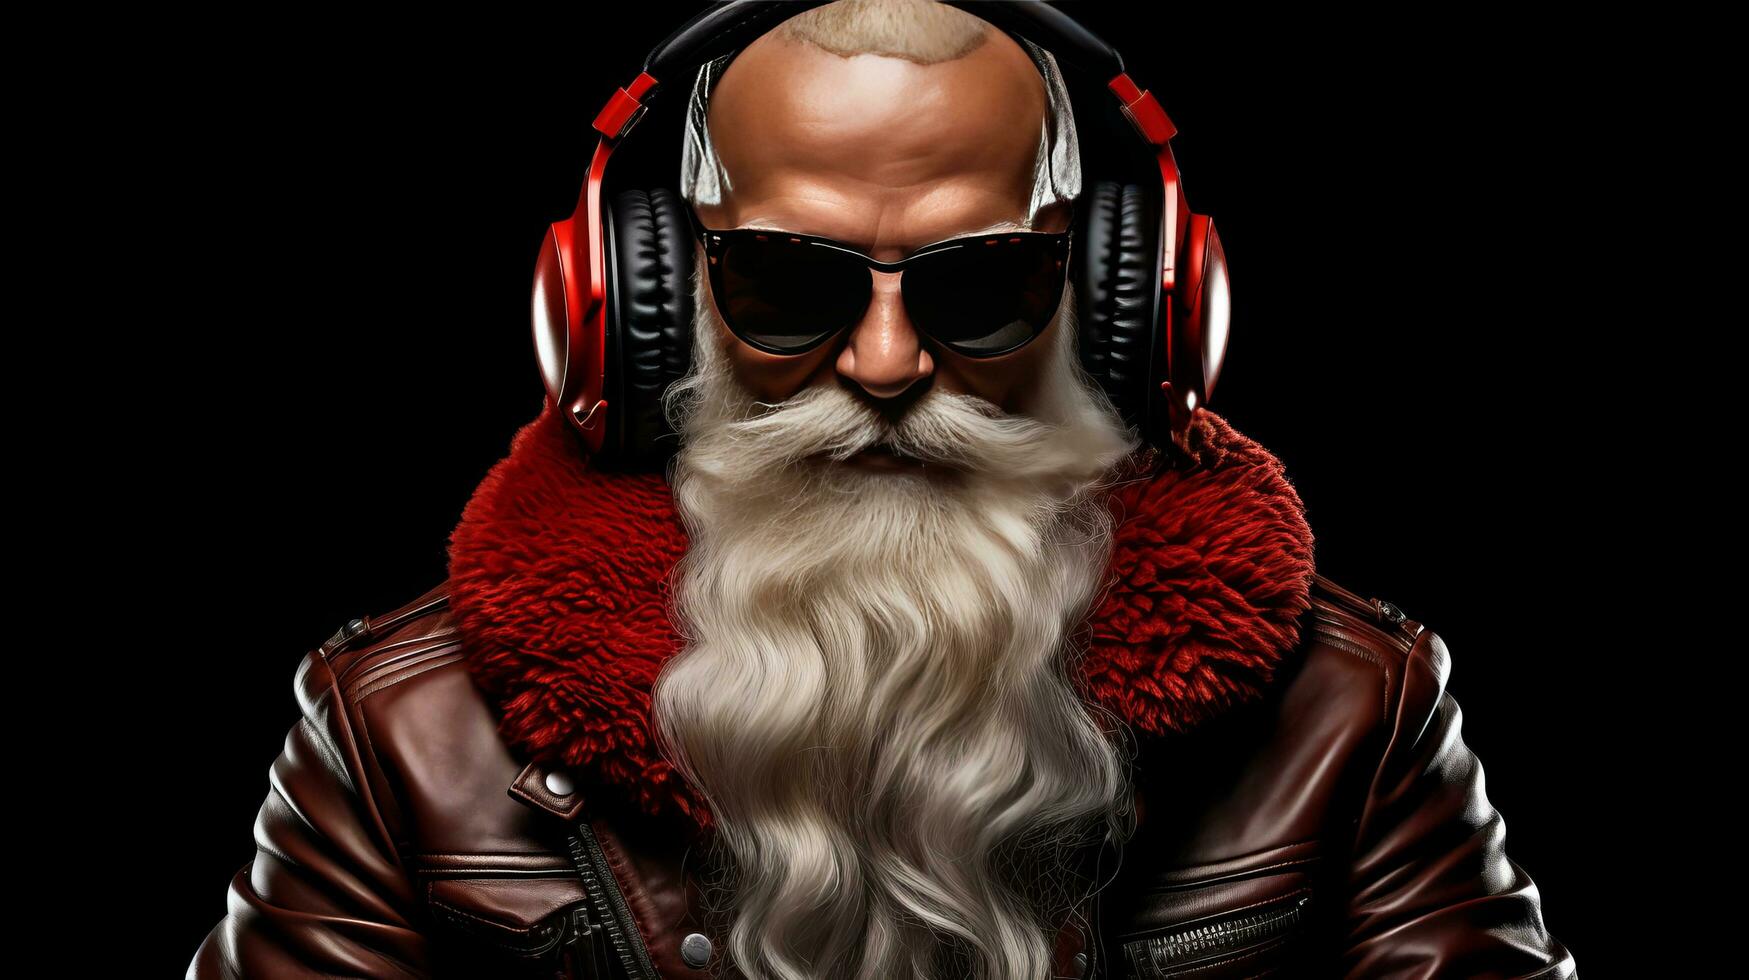 frio Papa Noel claus DJ foto